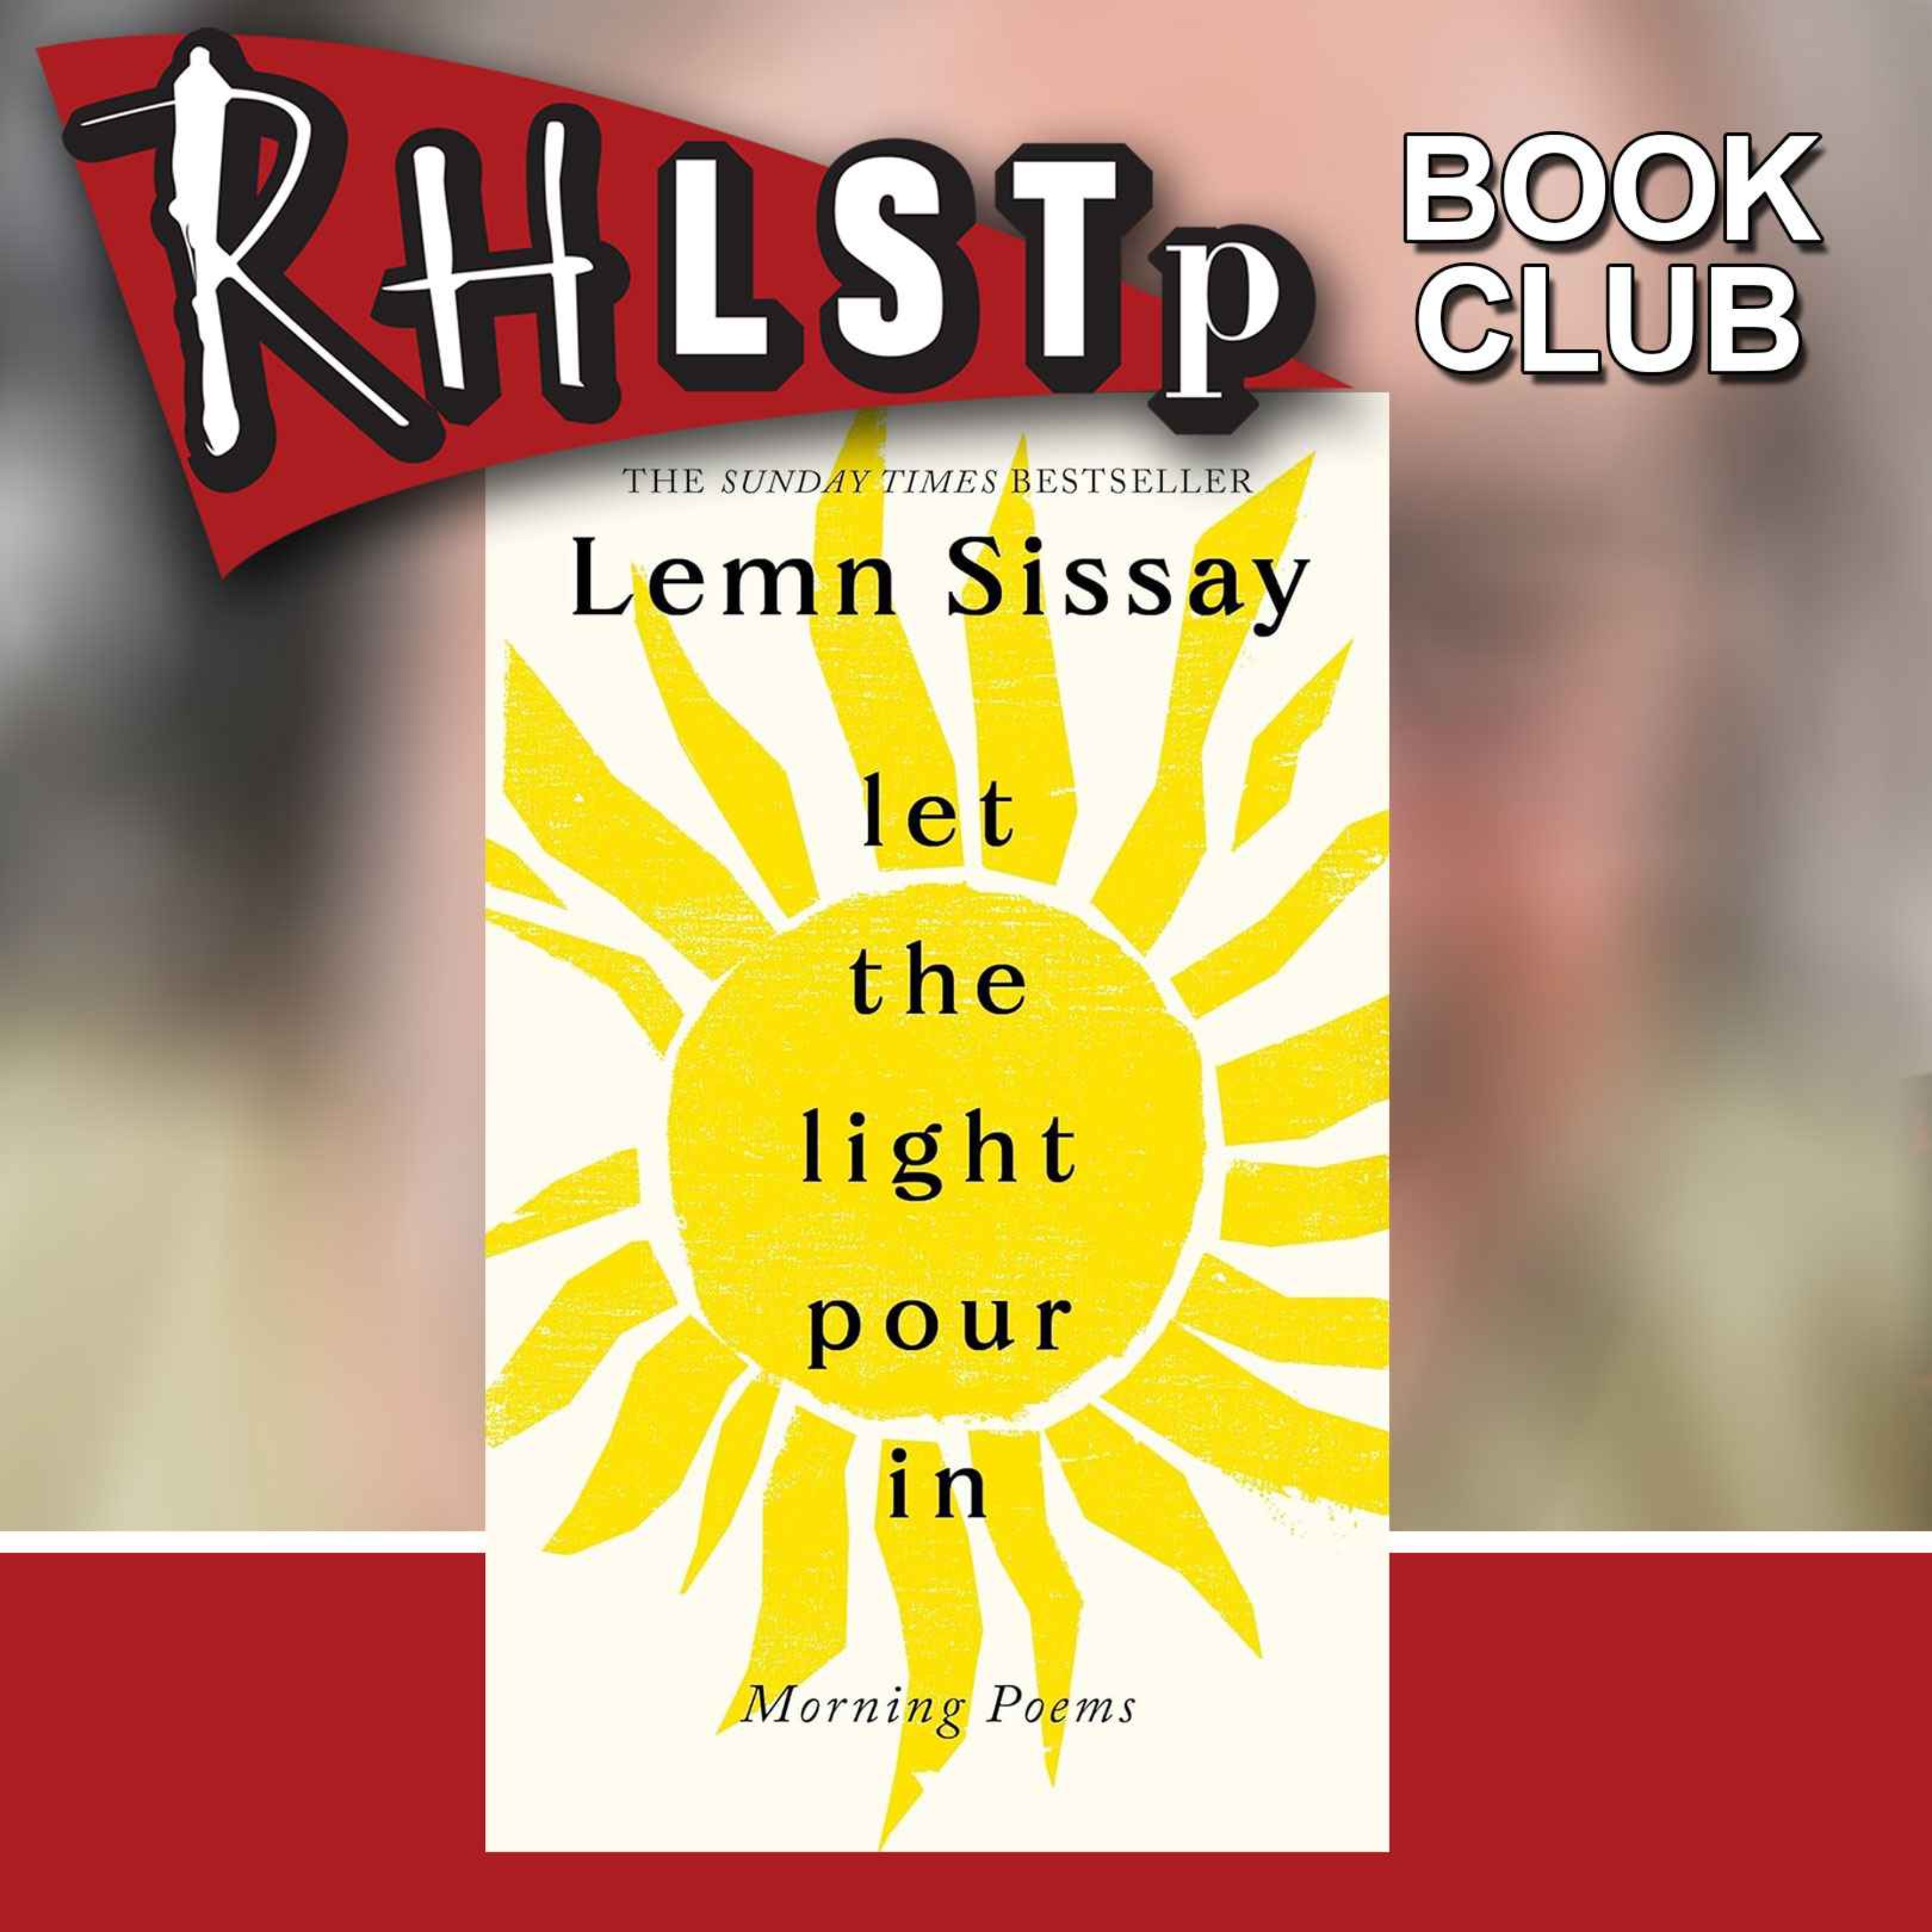 RHLSTP Book Club 92 - Lemn Sissay